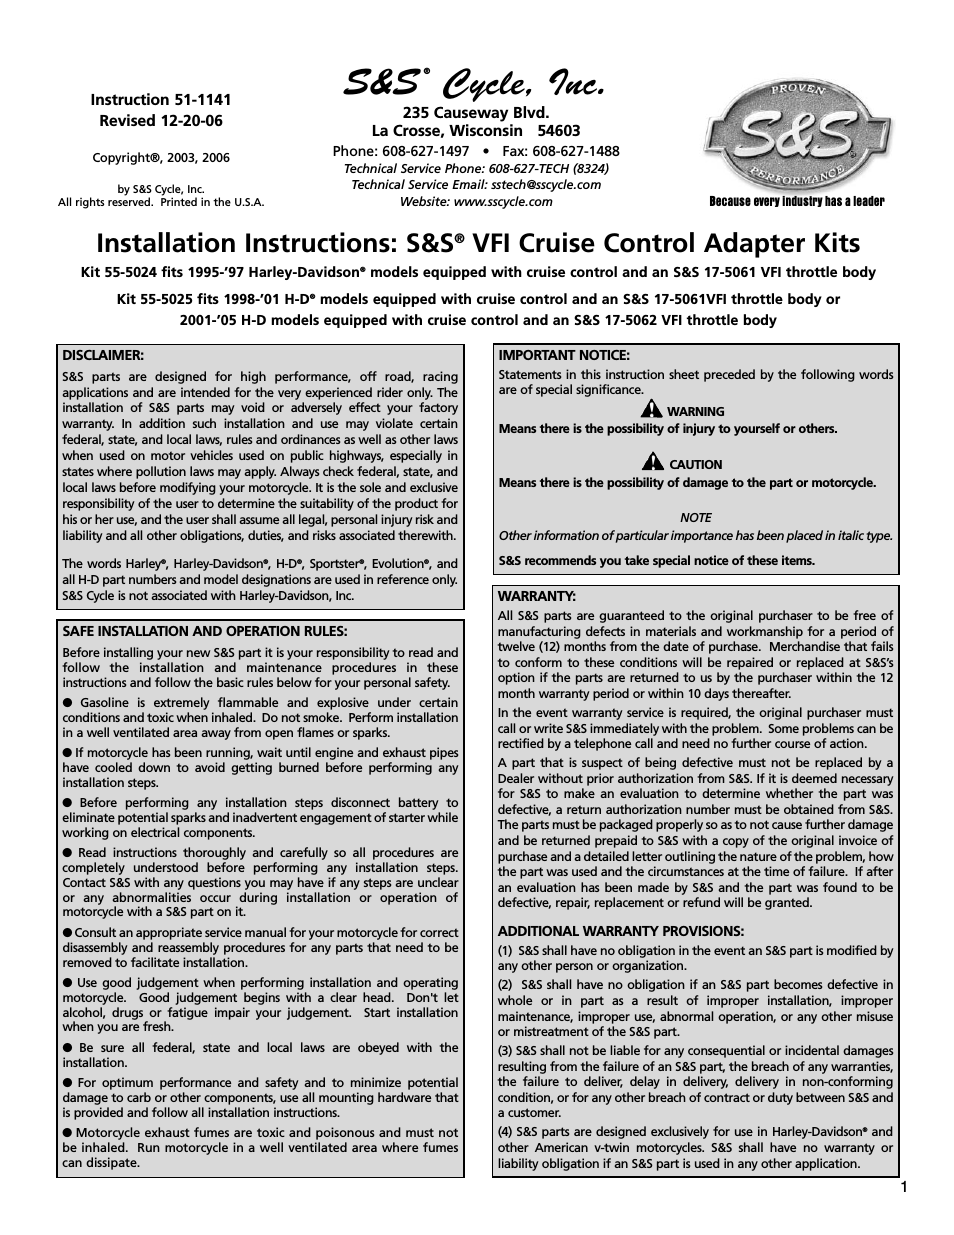 VFI Cruise Control Adapter Kits